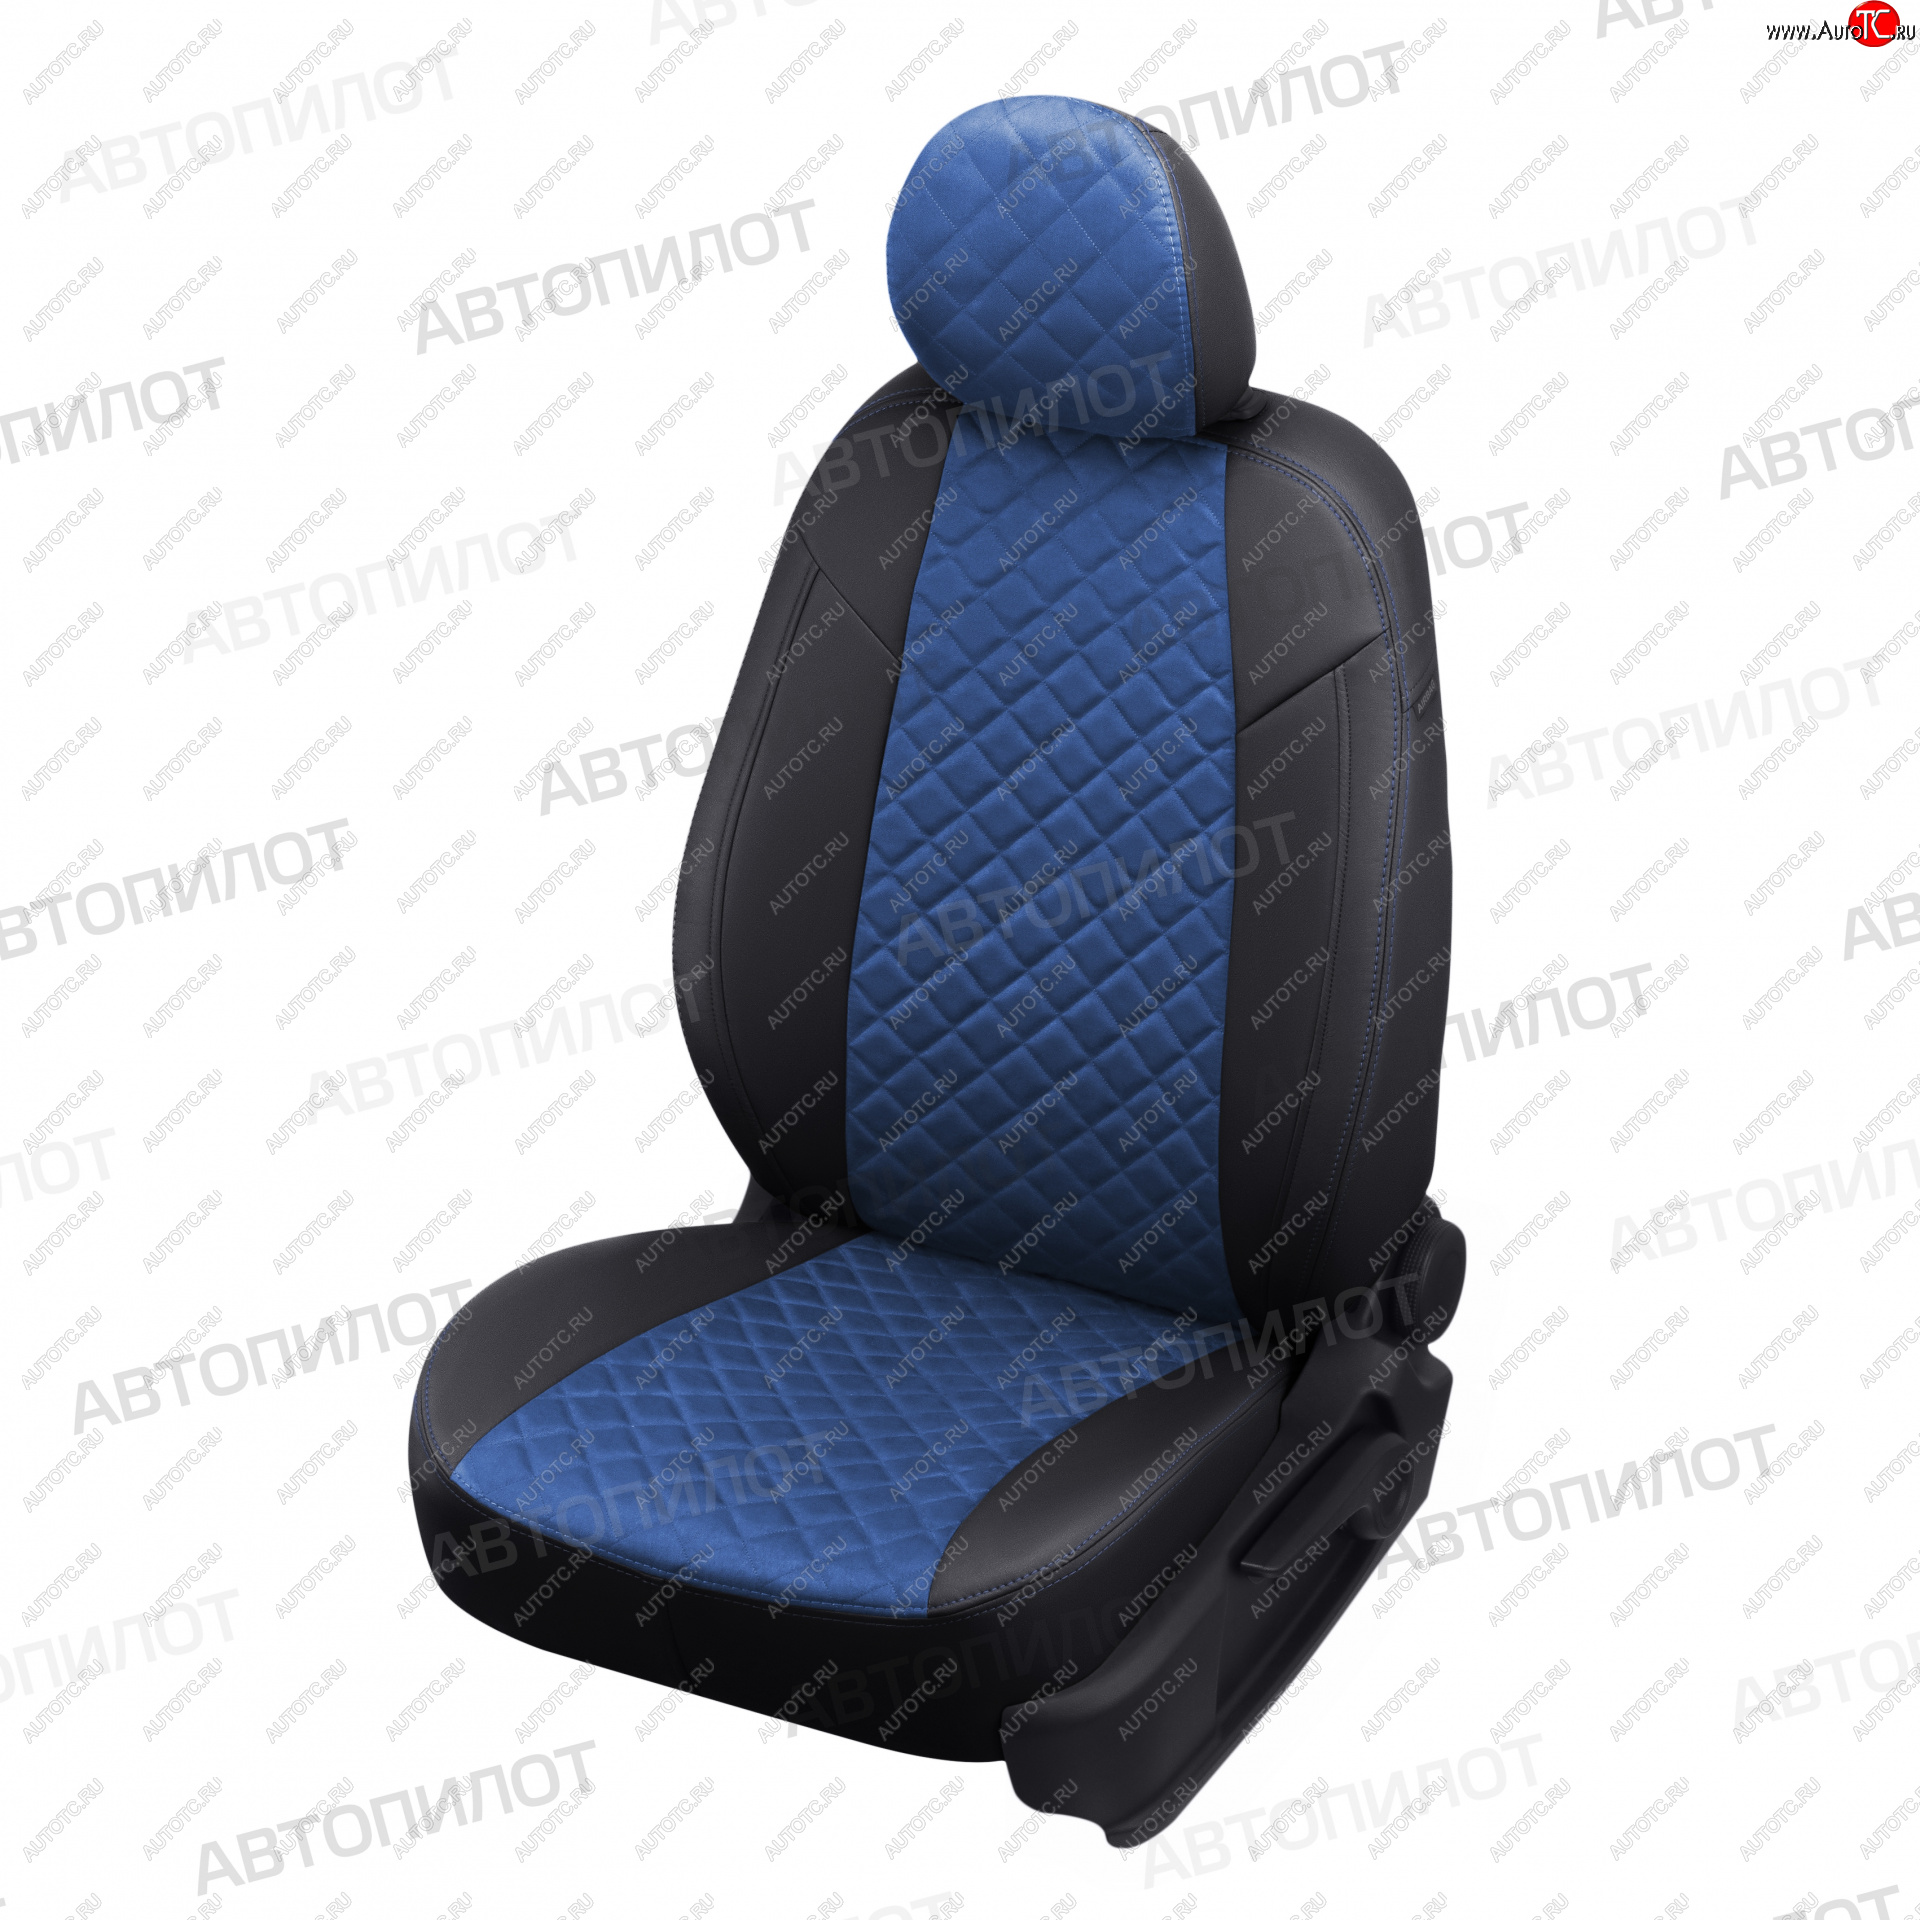 13 999 р. Чехлы сидений (экокожа/алькантара) Автопилот Ромб  KIA Cerato  1 LD (2003-2008) (черный/синий)